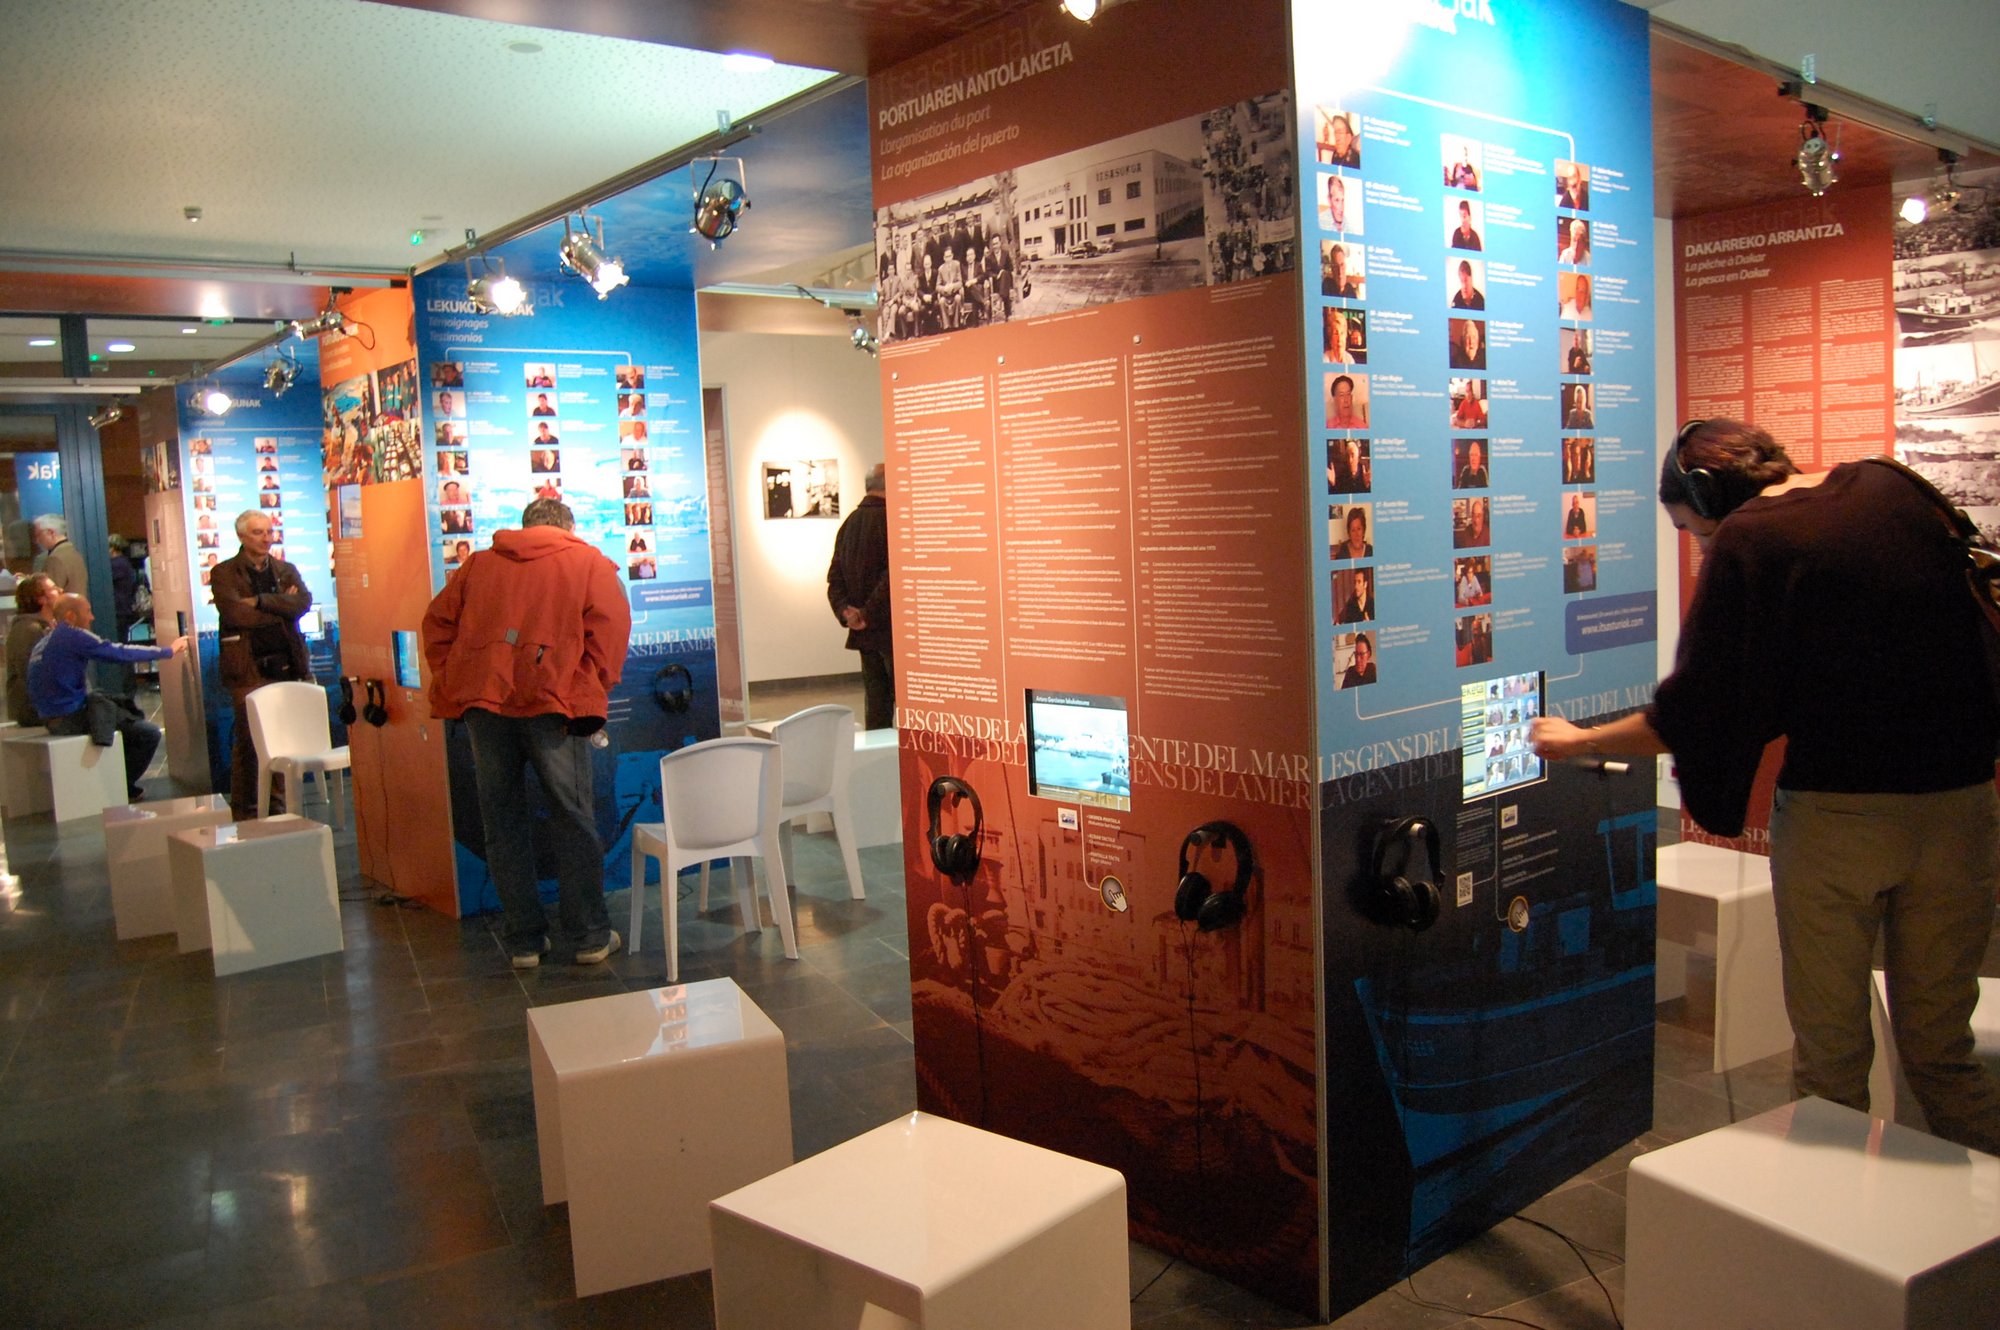 Exposition "Itsasturiak, les gens de la mer" (2011)